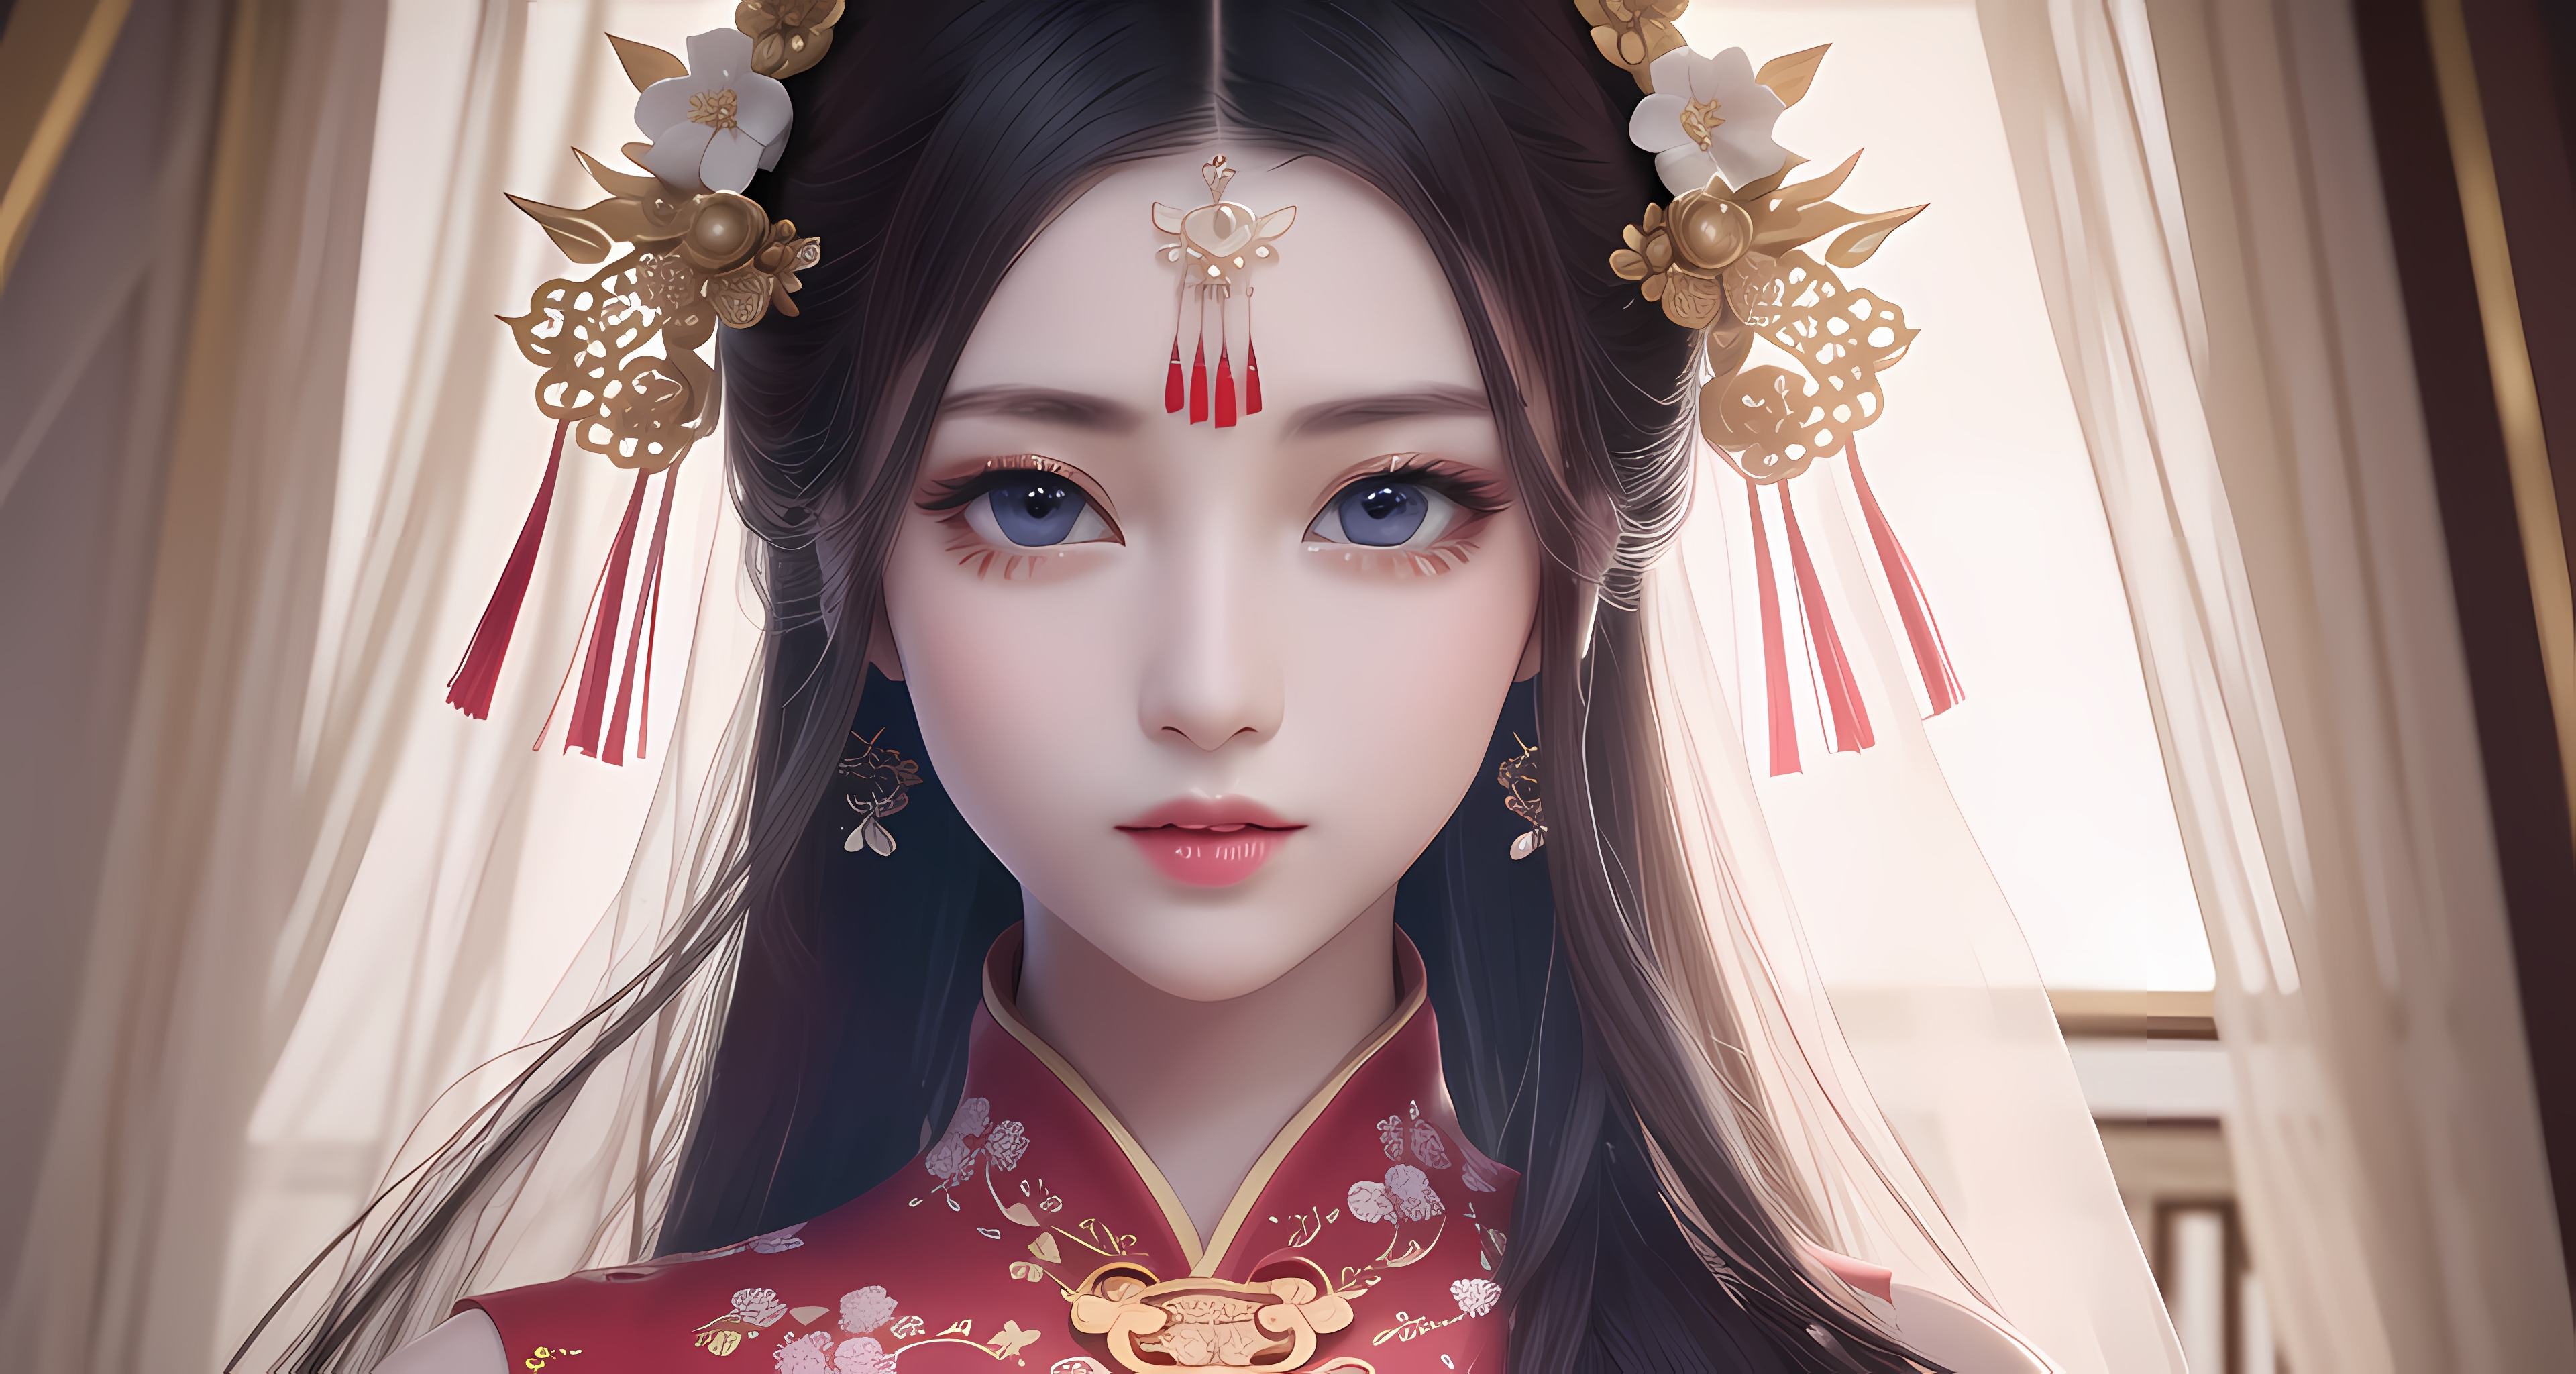 Ai Art Earring Chi Pao Model From Xiaolxl 2 5D Women Asian Flower In Hair 3840x2048